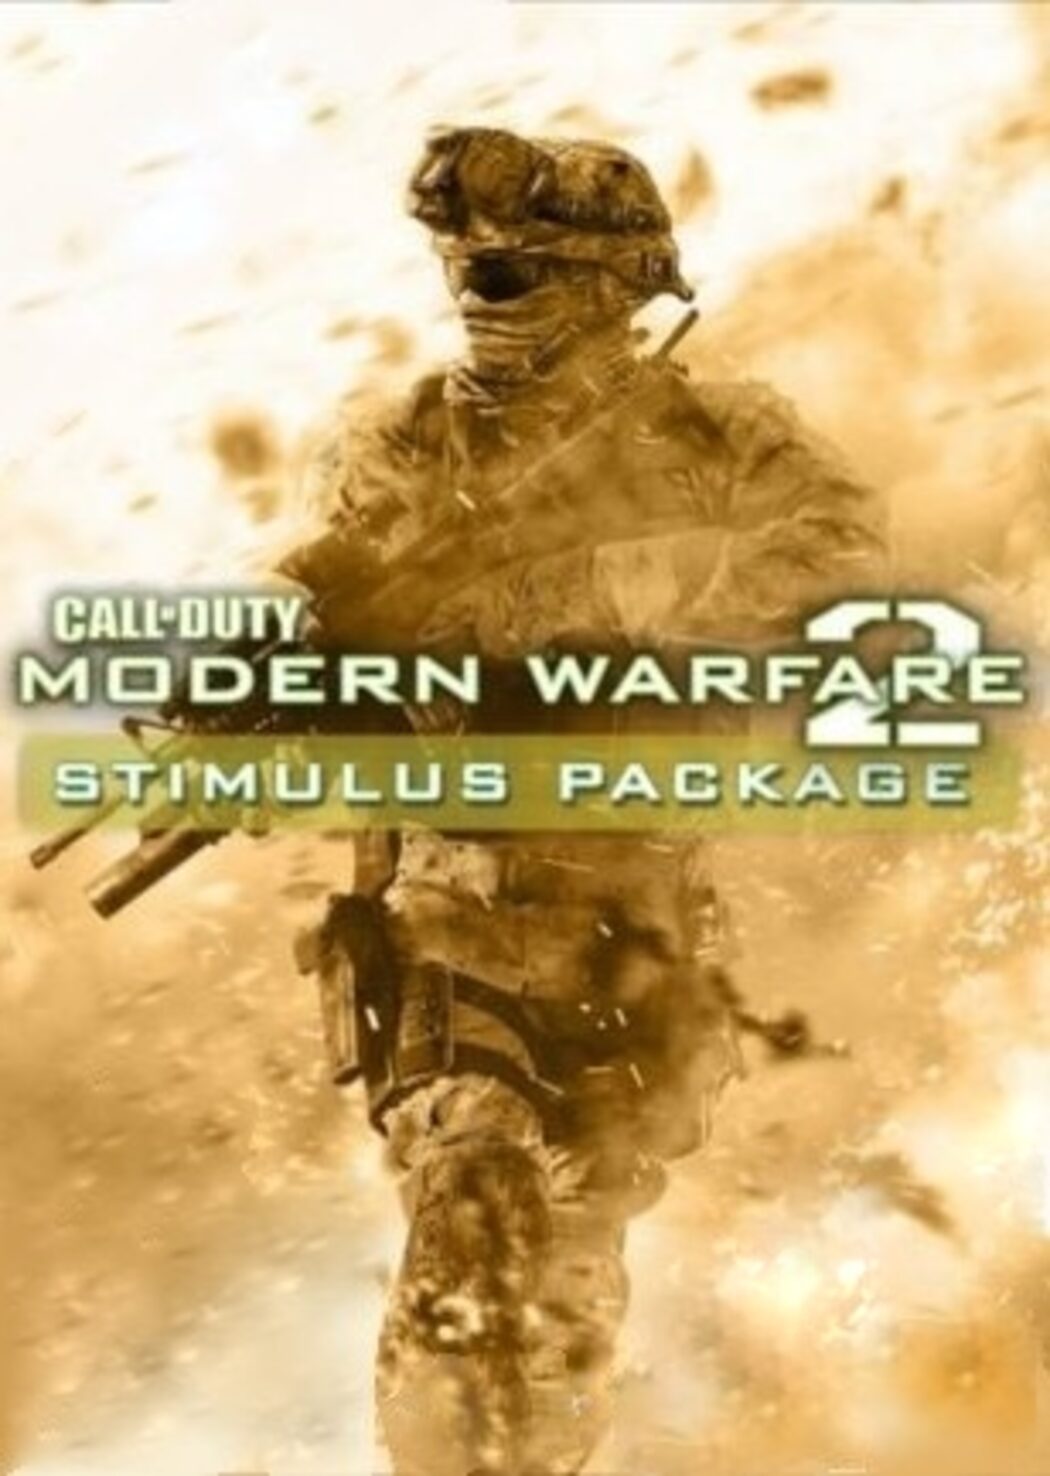 Call of Duty: Modern Warfare 2 Resurgence Pack (MAC) - PC - Buy it at Nuuvem